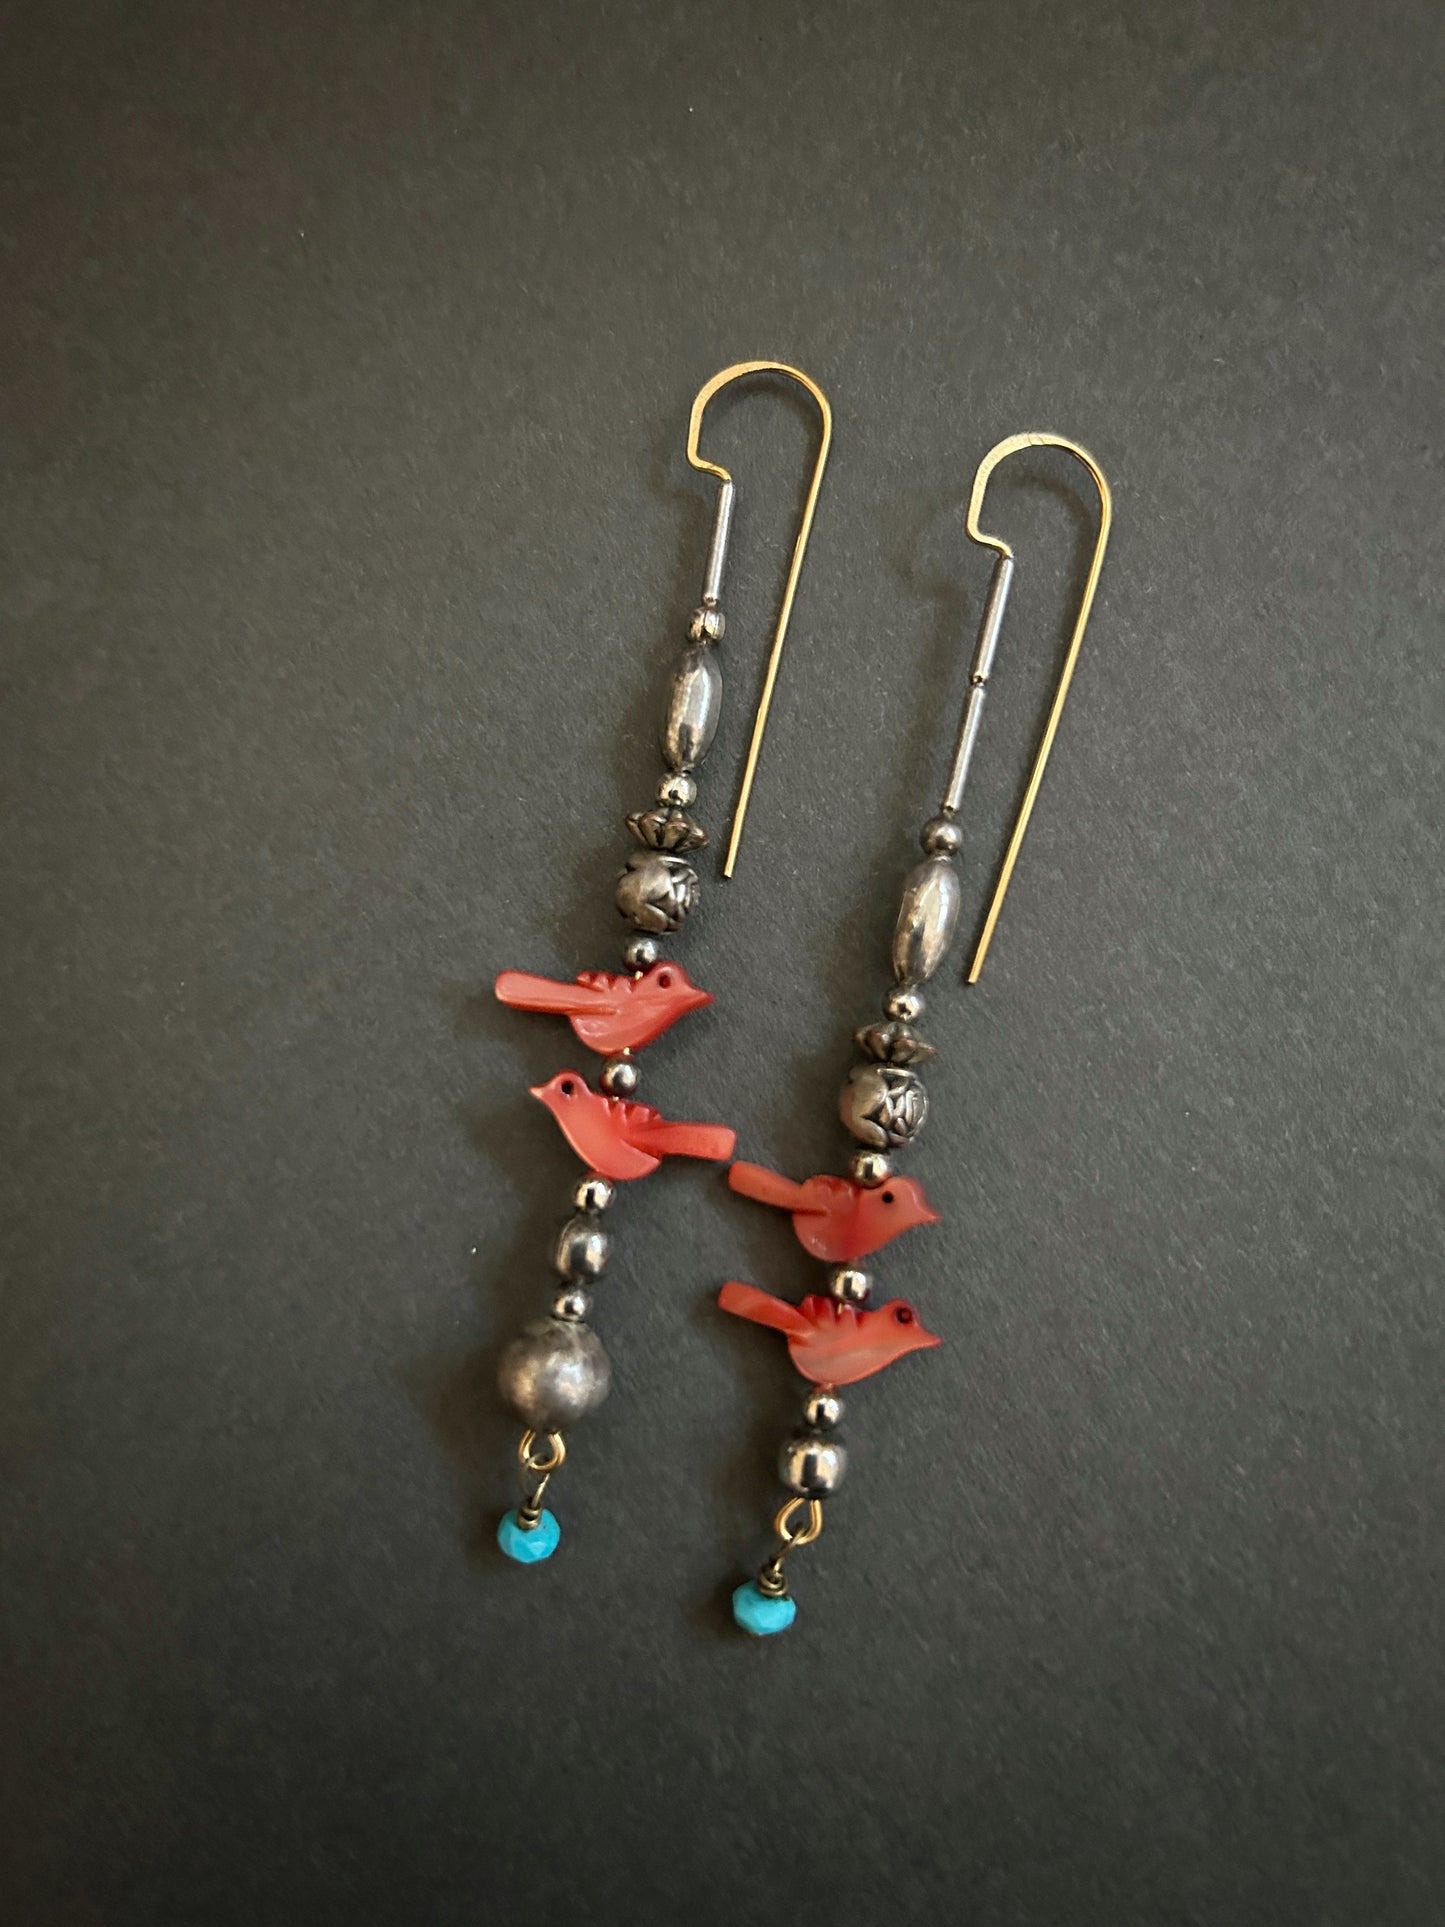 Bird fetish earrings with turquoise